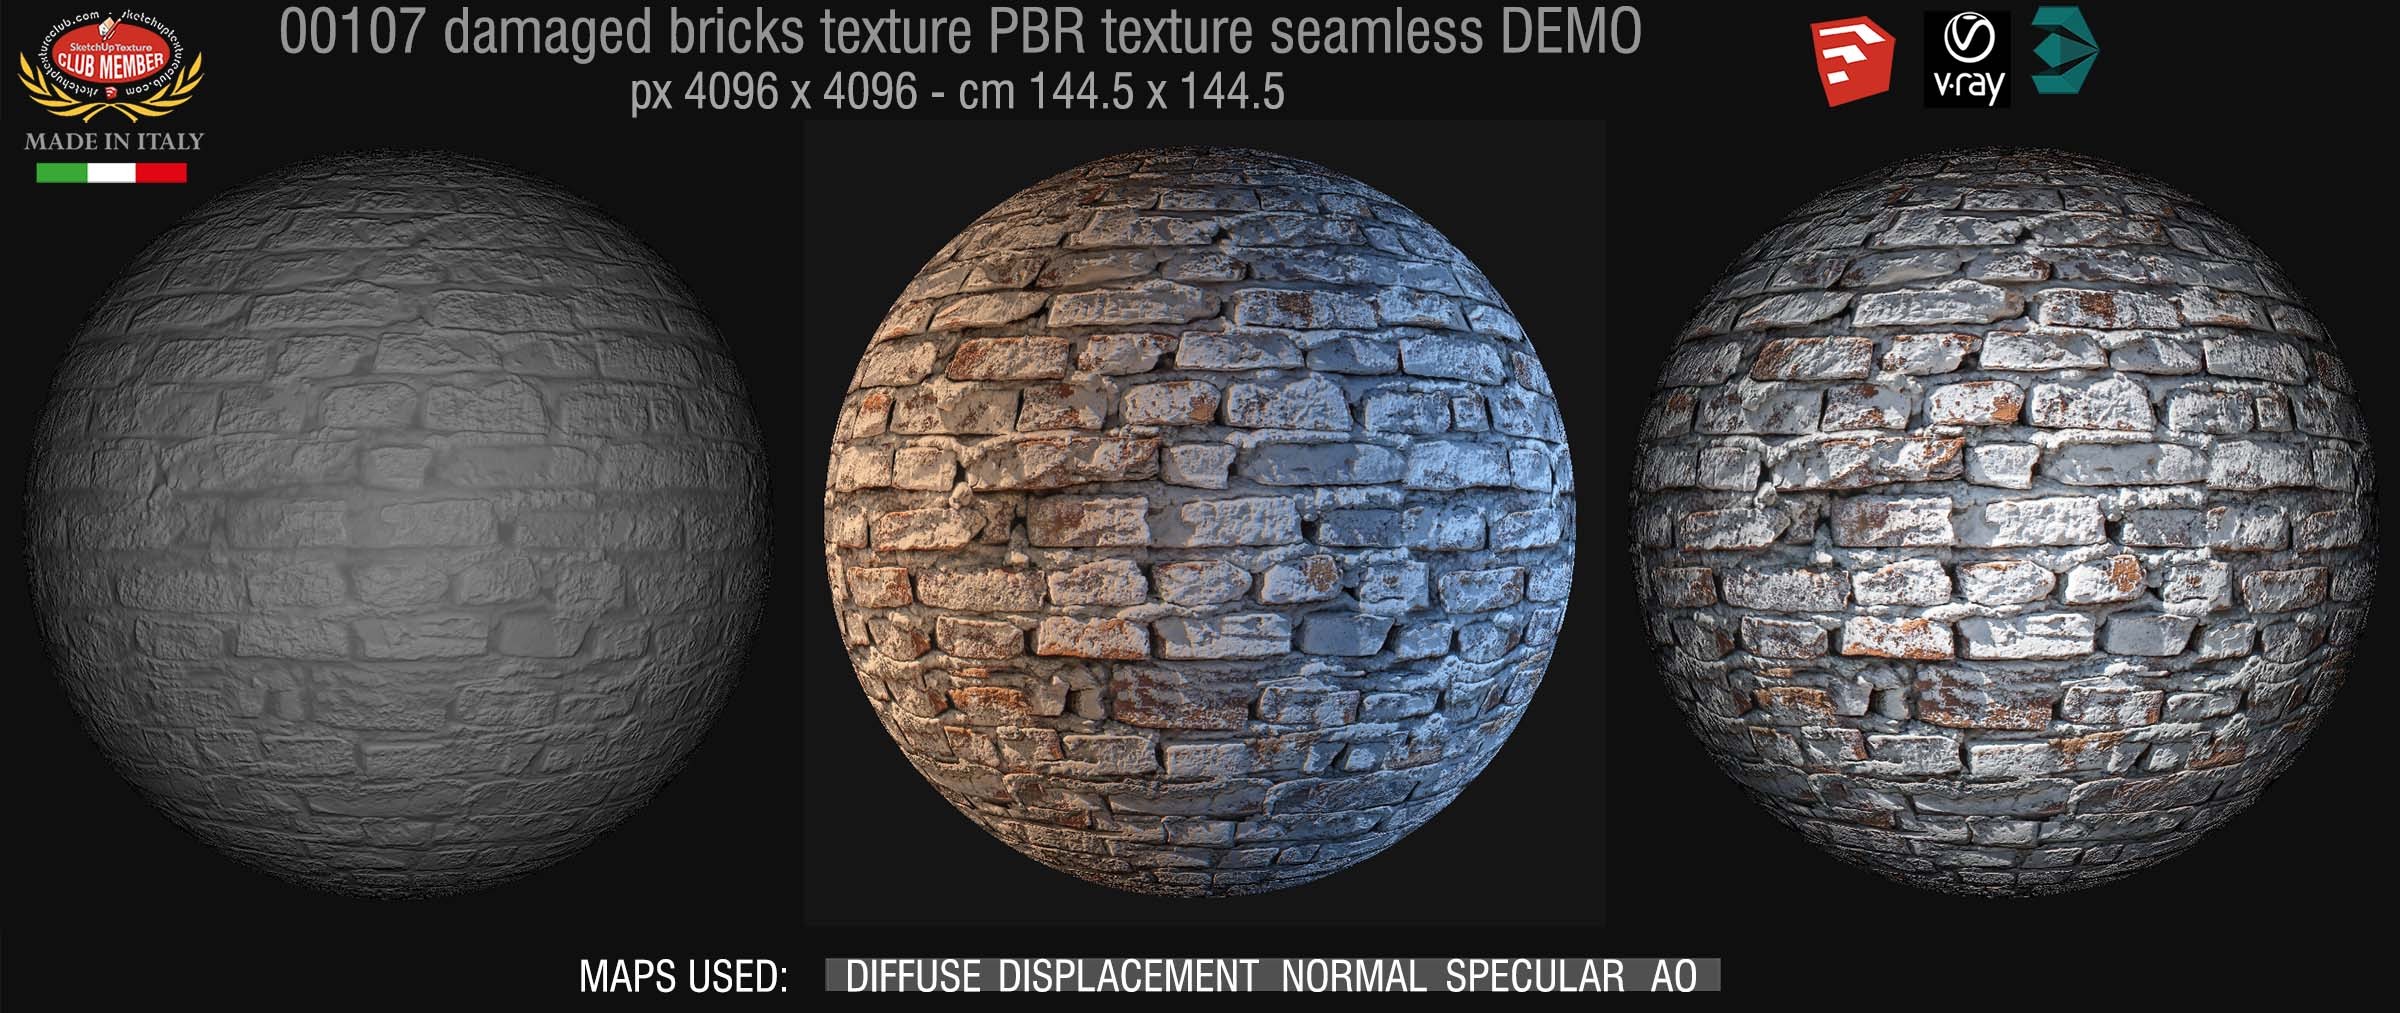 00107 Damaged bricks PBR texture seamless DEMO